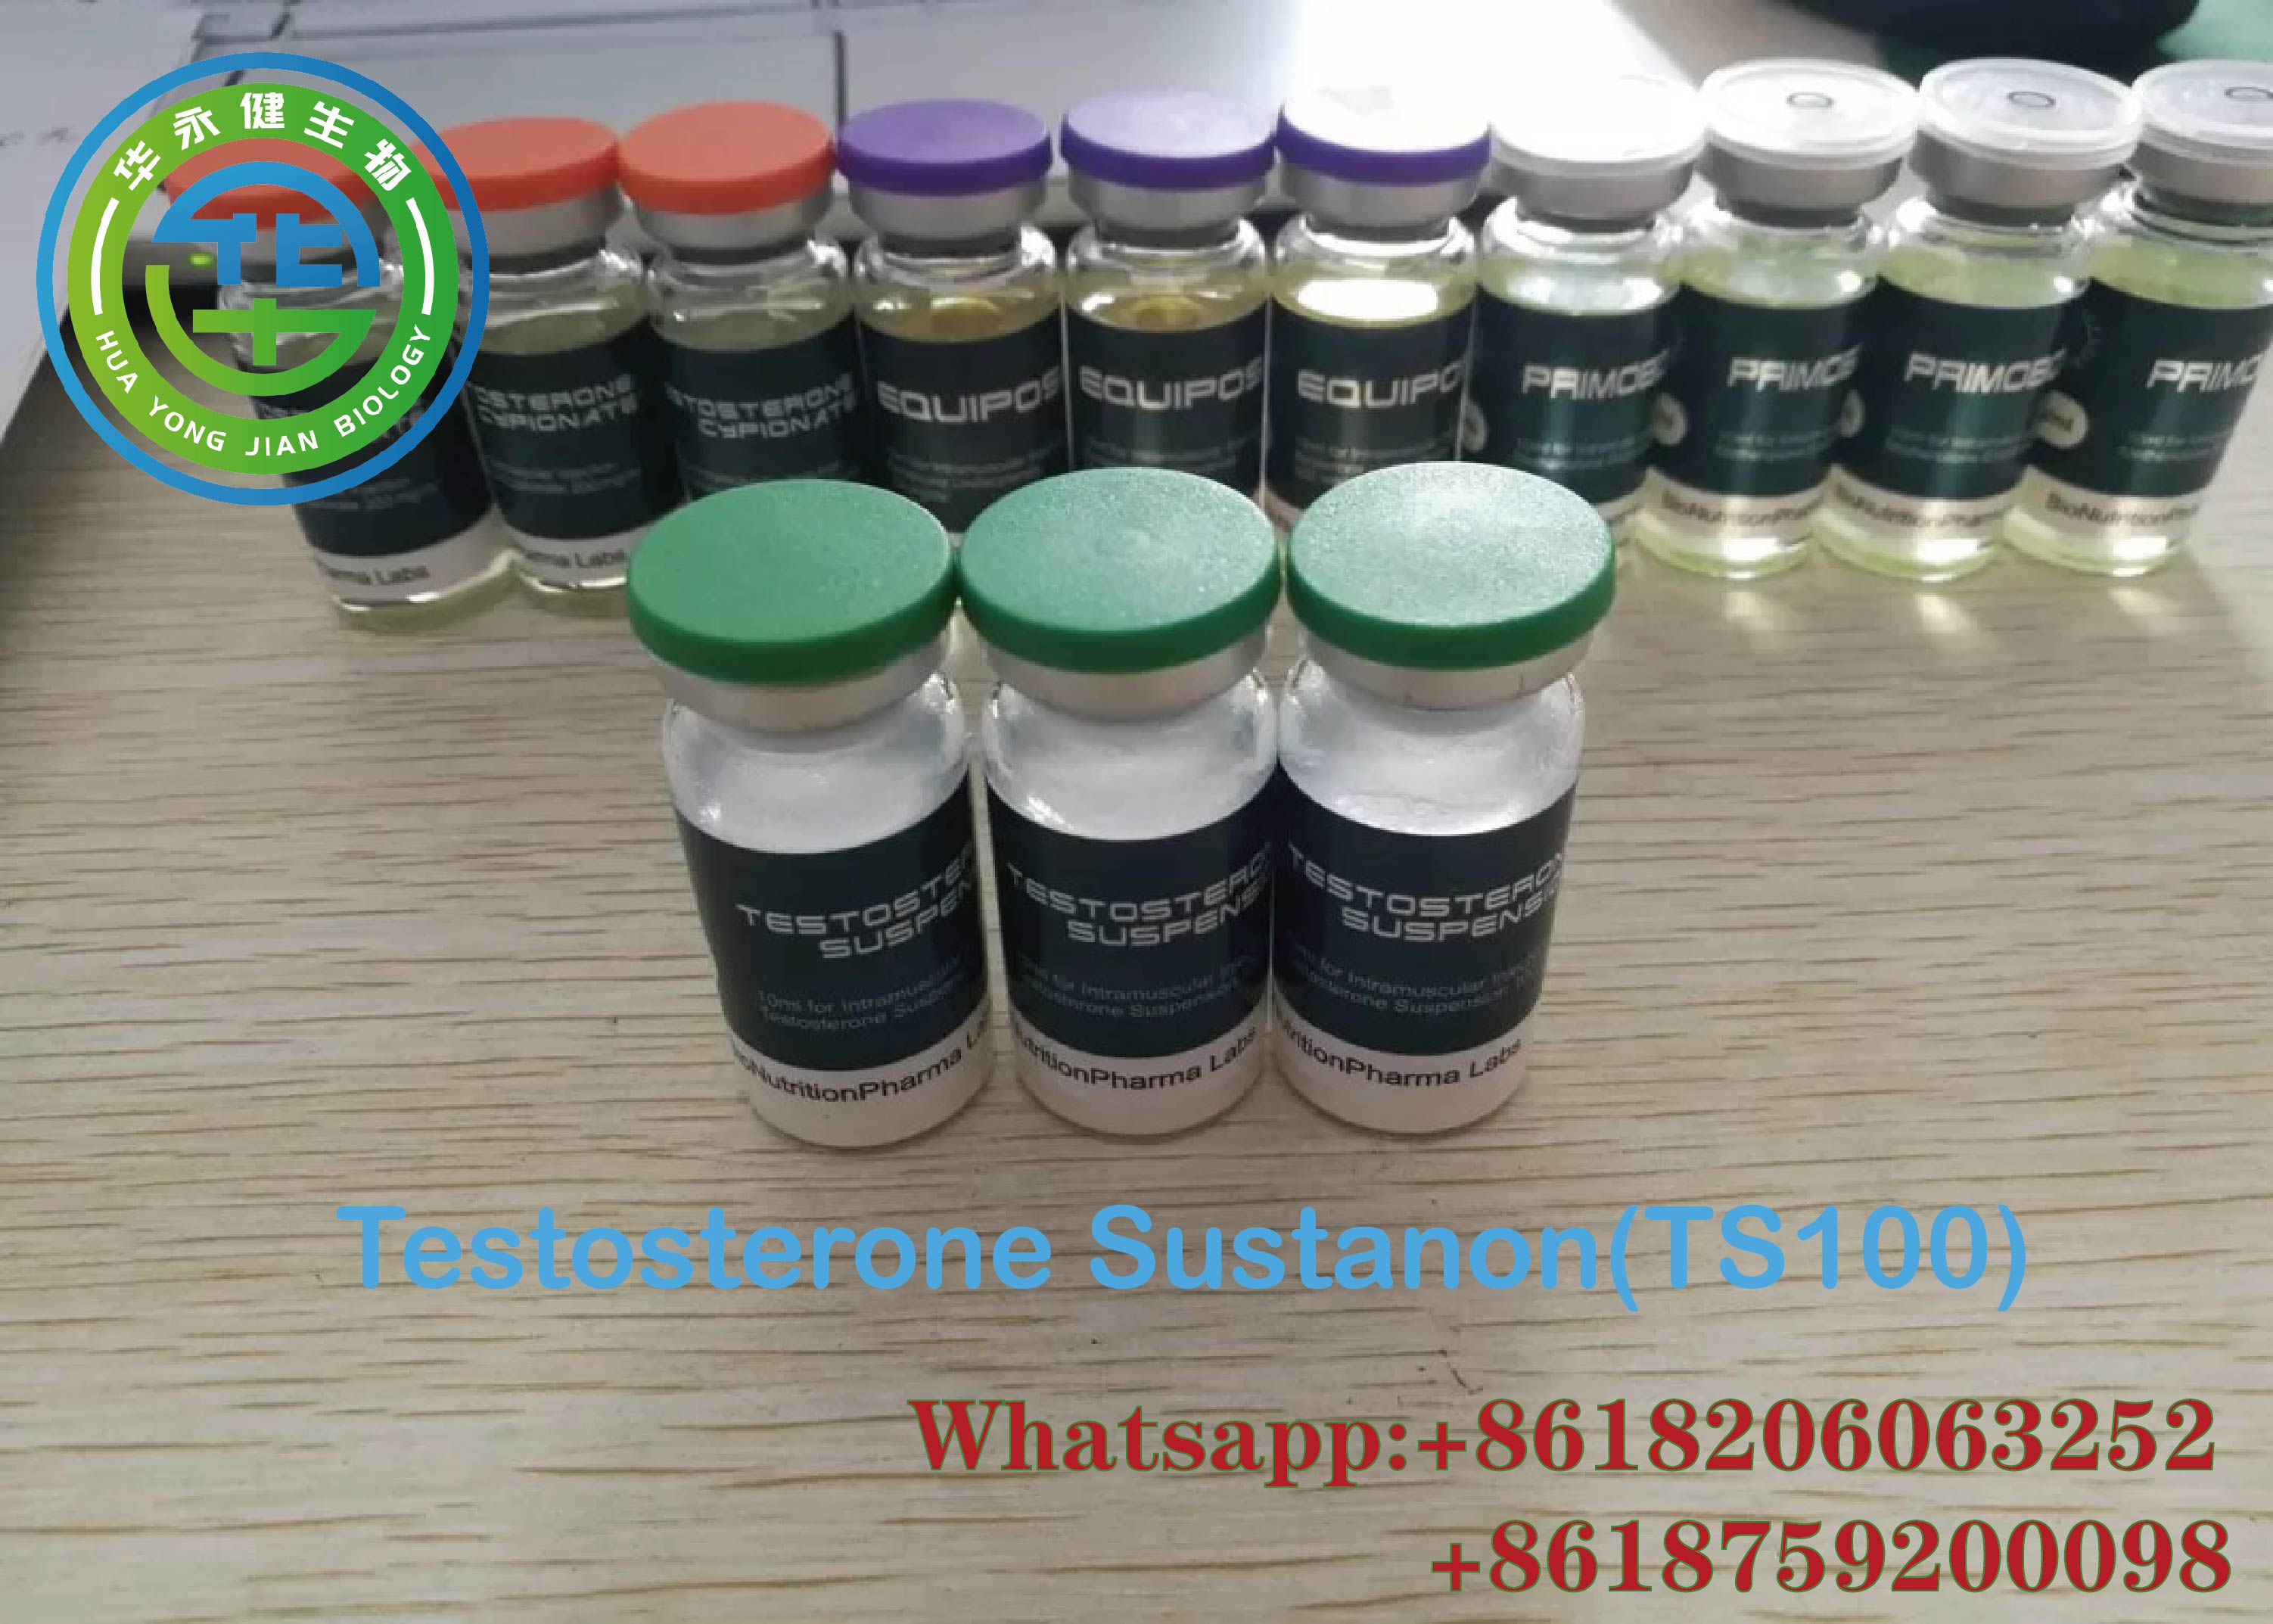 Testosterone Sustanon Yellow Liquid TS100 เตียรอยด์ Anabolic ที่ฉีดได้ 100 มก. / มล. สำหรับมวลกล้ามเนื้อ ภาพเด่น